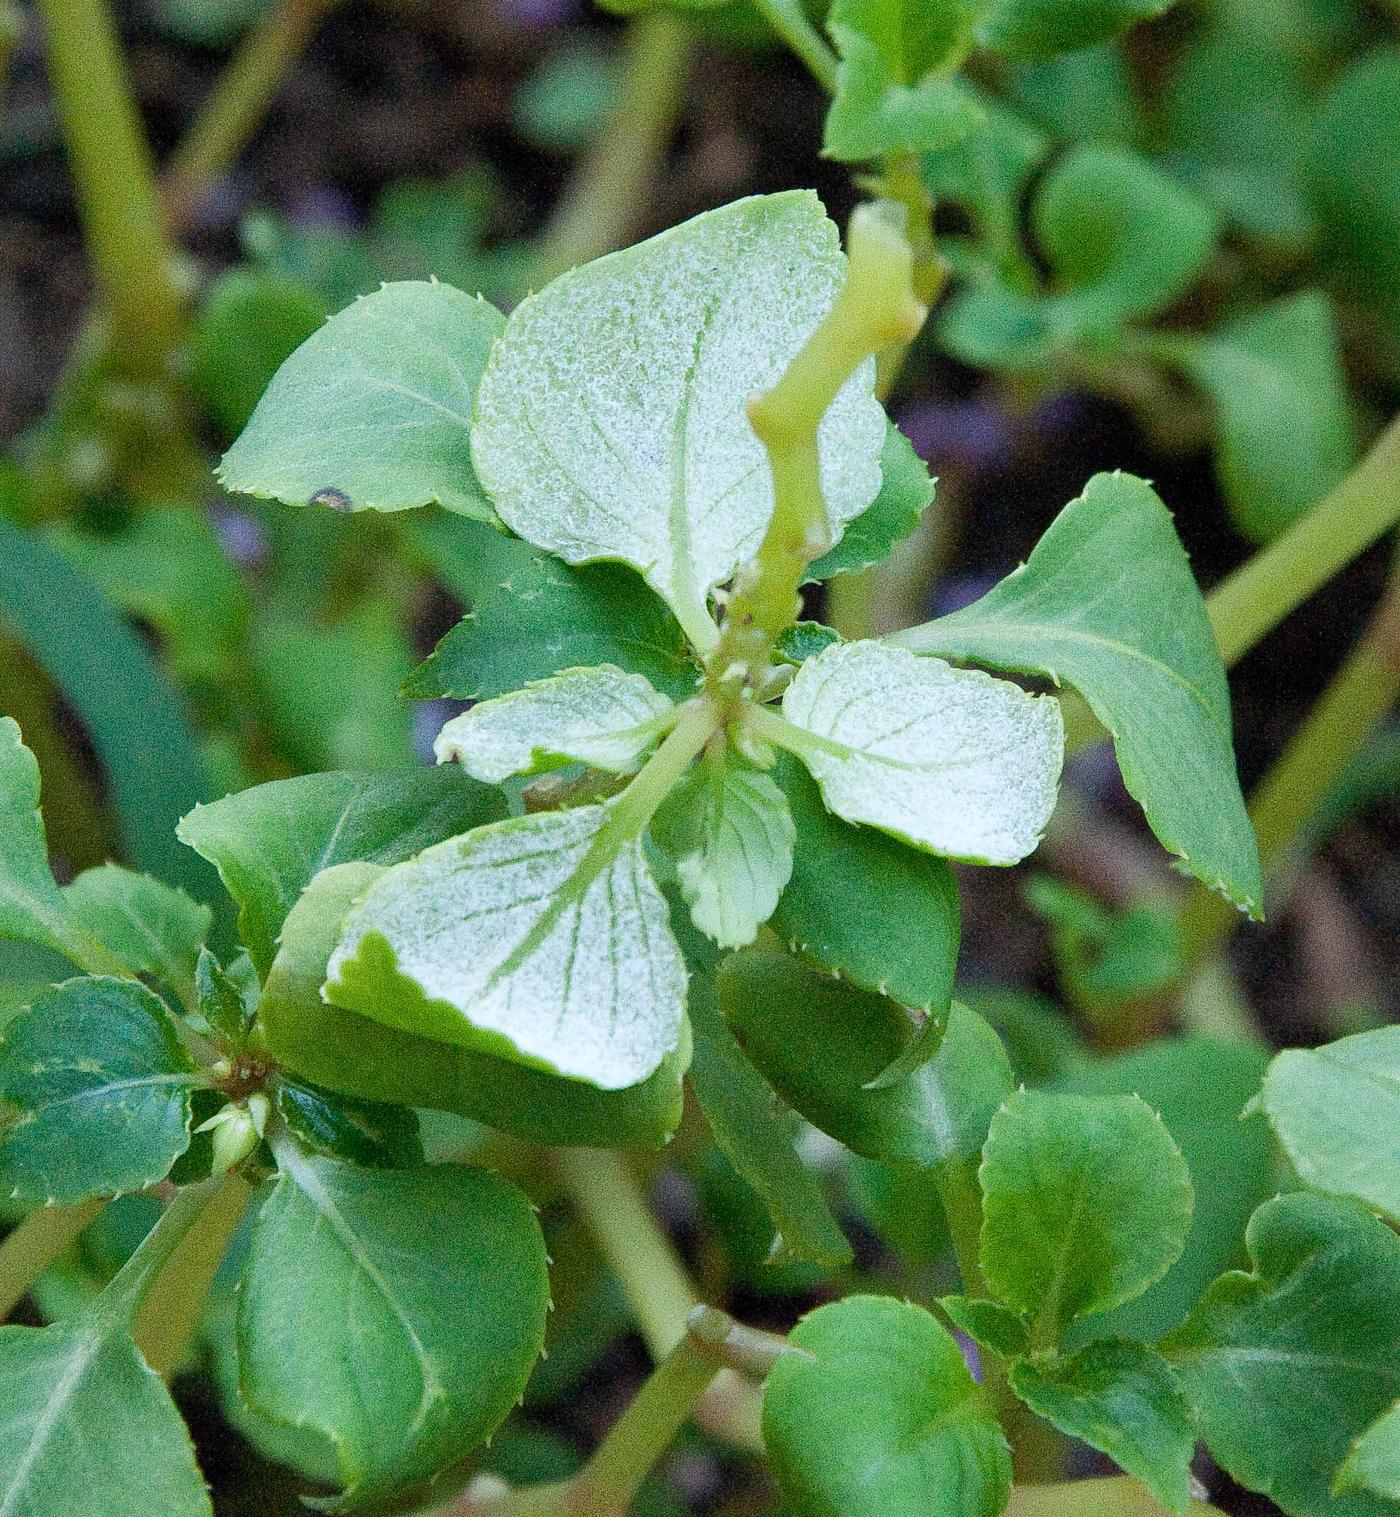 Sporulation of impatiens downy mildew on underside of leaf